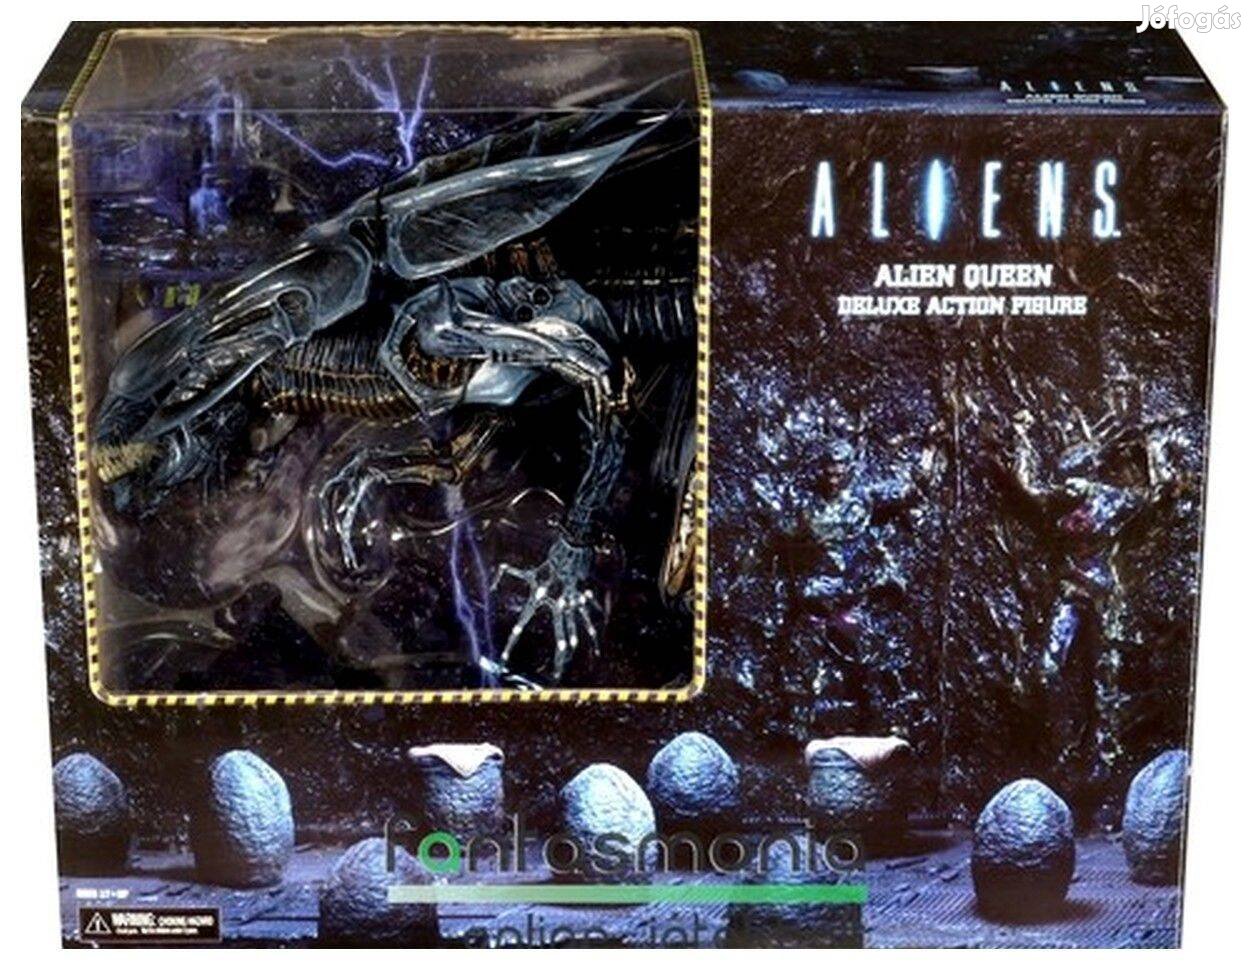 76 cm Neca Aliens Queen Alien Királynő figura Ultra Deluxe figura